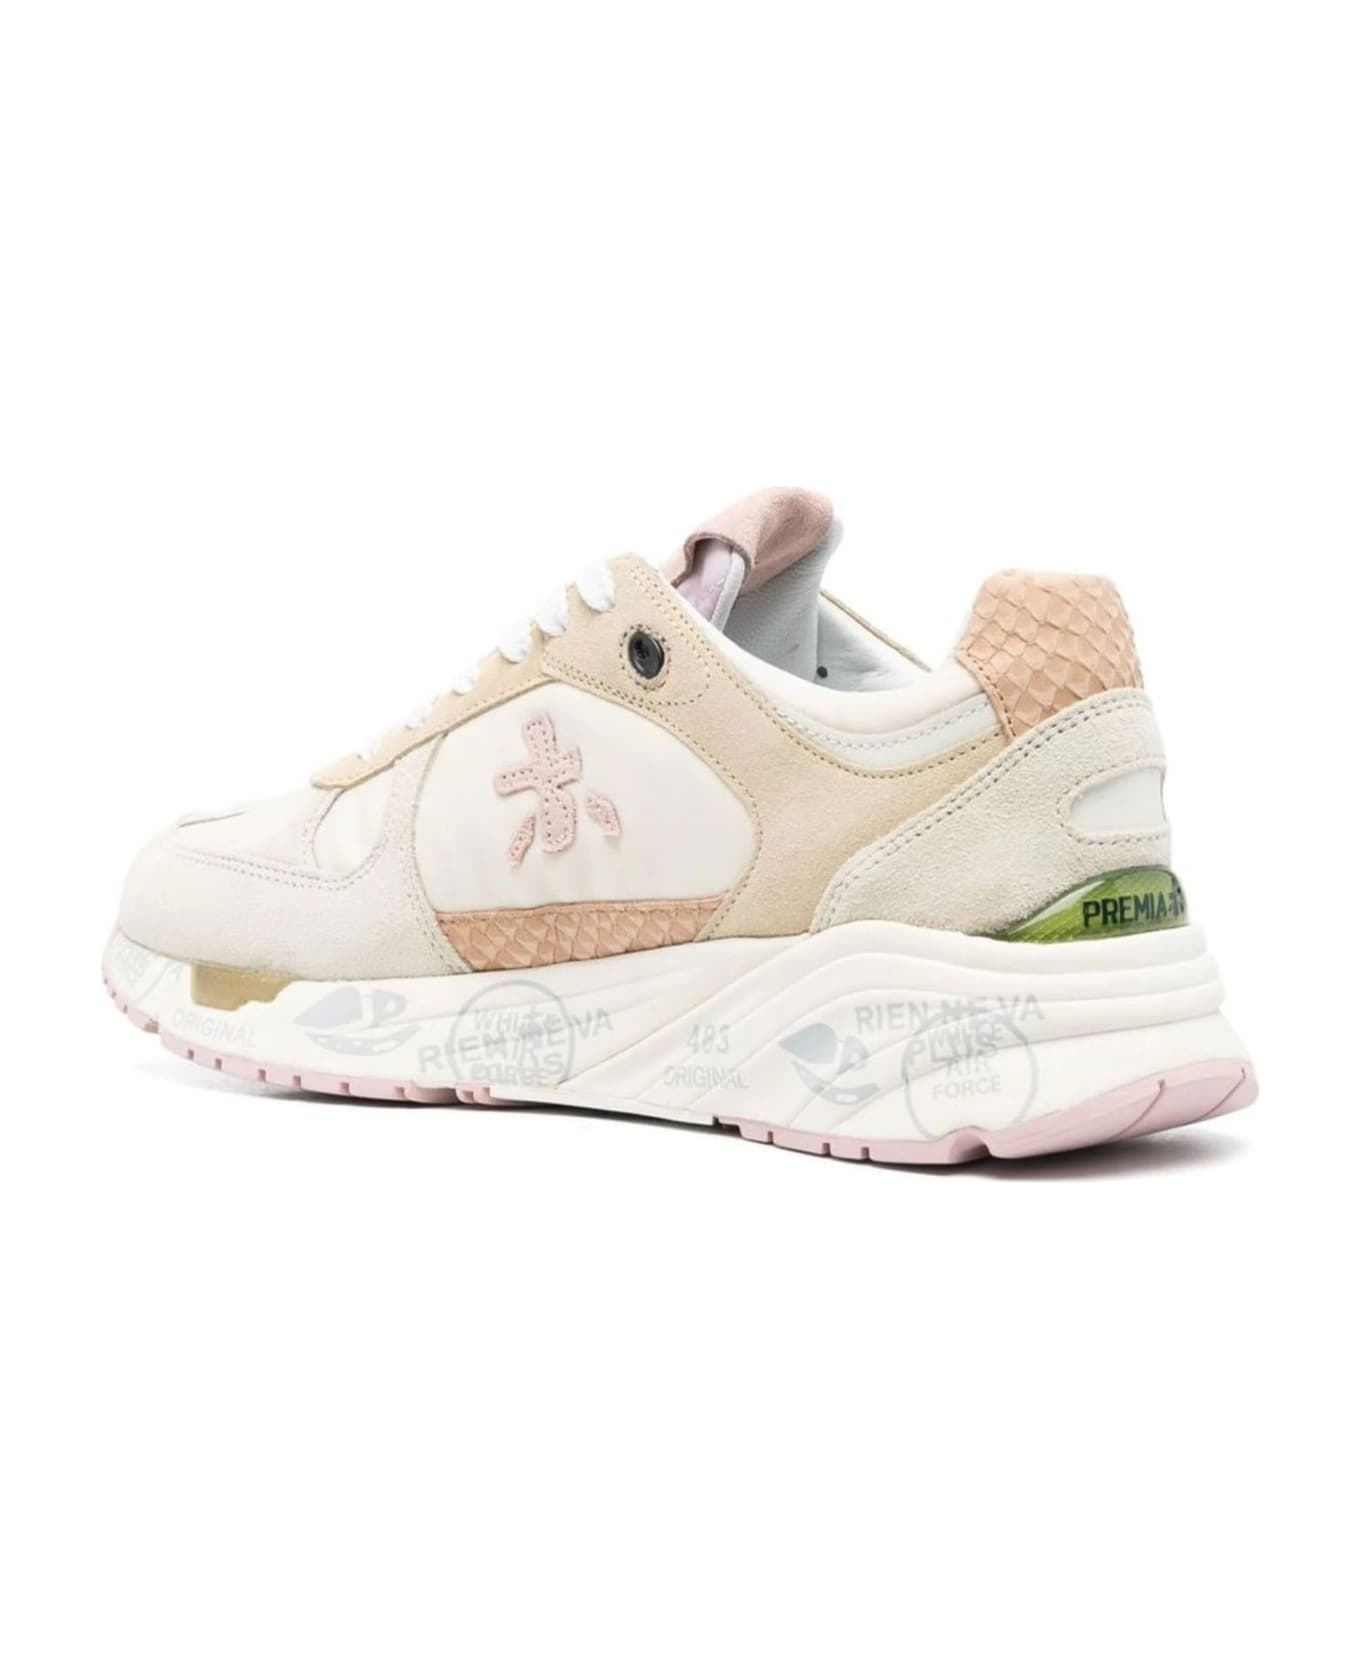 Premiata Mase Sneakers - Butter Beige Pink スニーカー